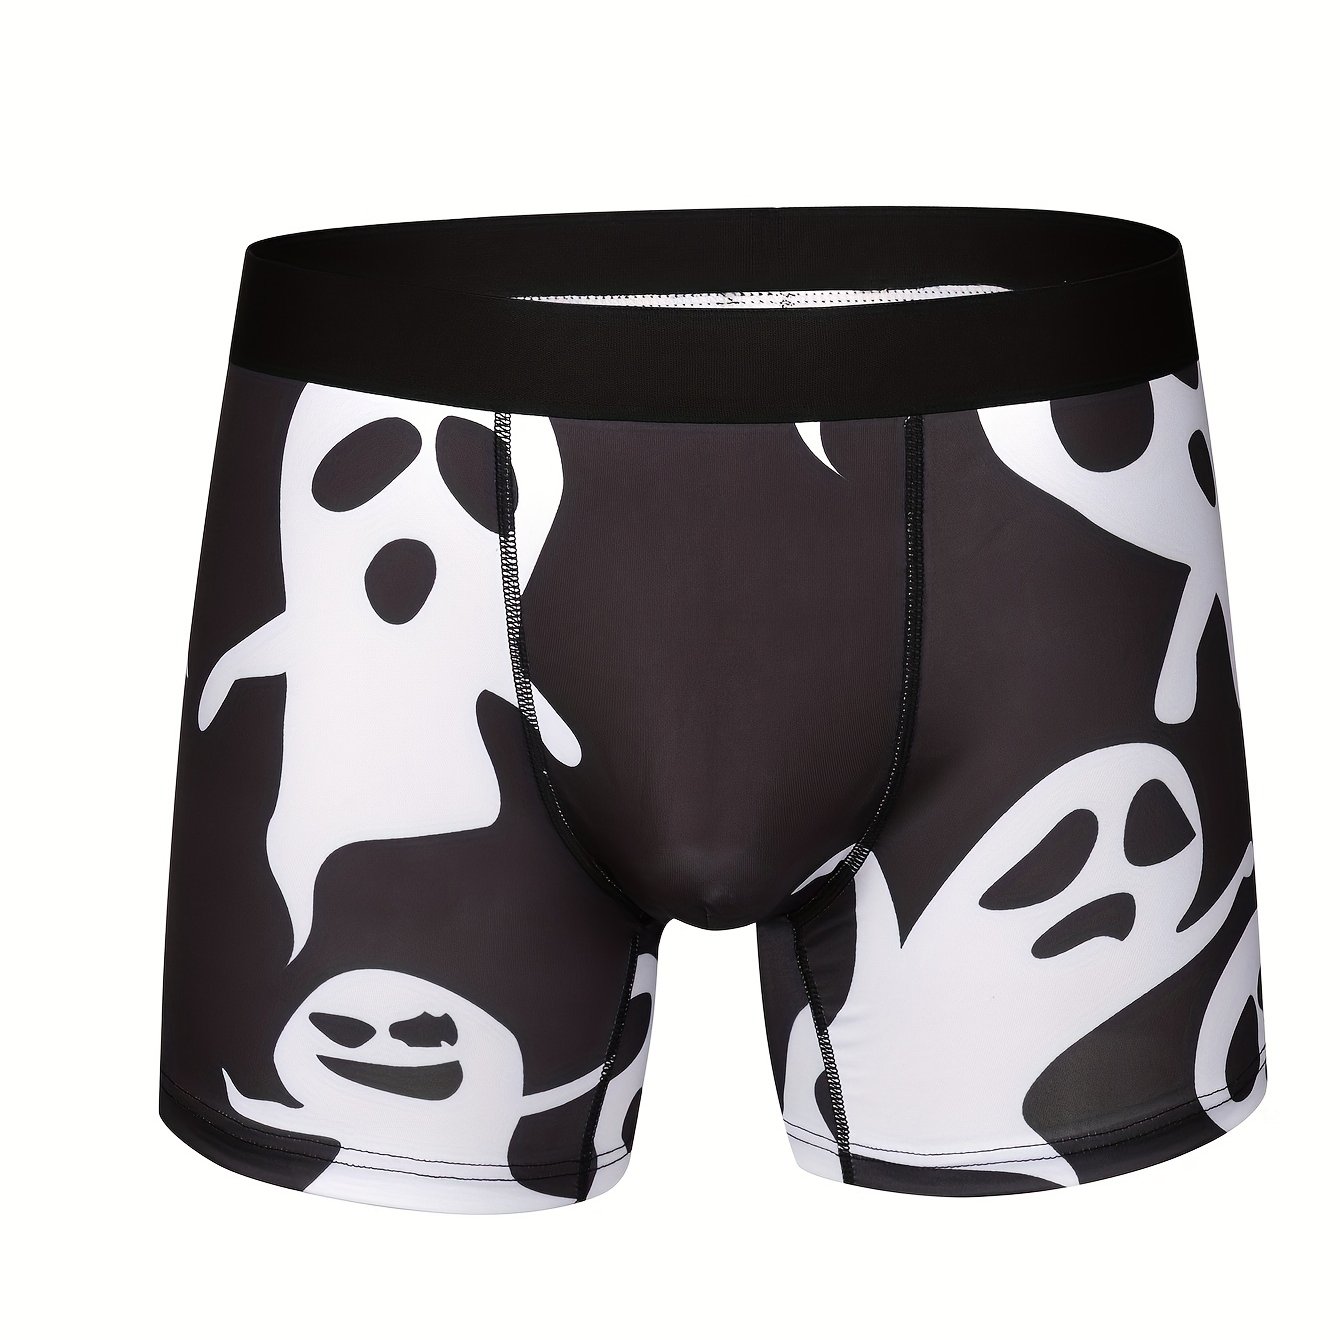 Bacon Theme Men's Boxer Briefs Size M Funny Underwear Gift Size 32